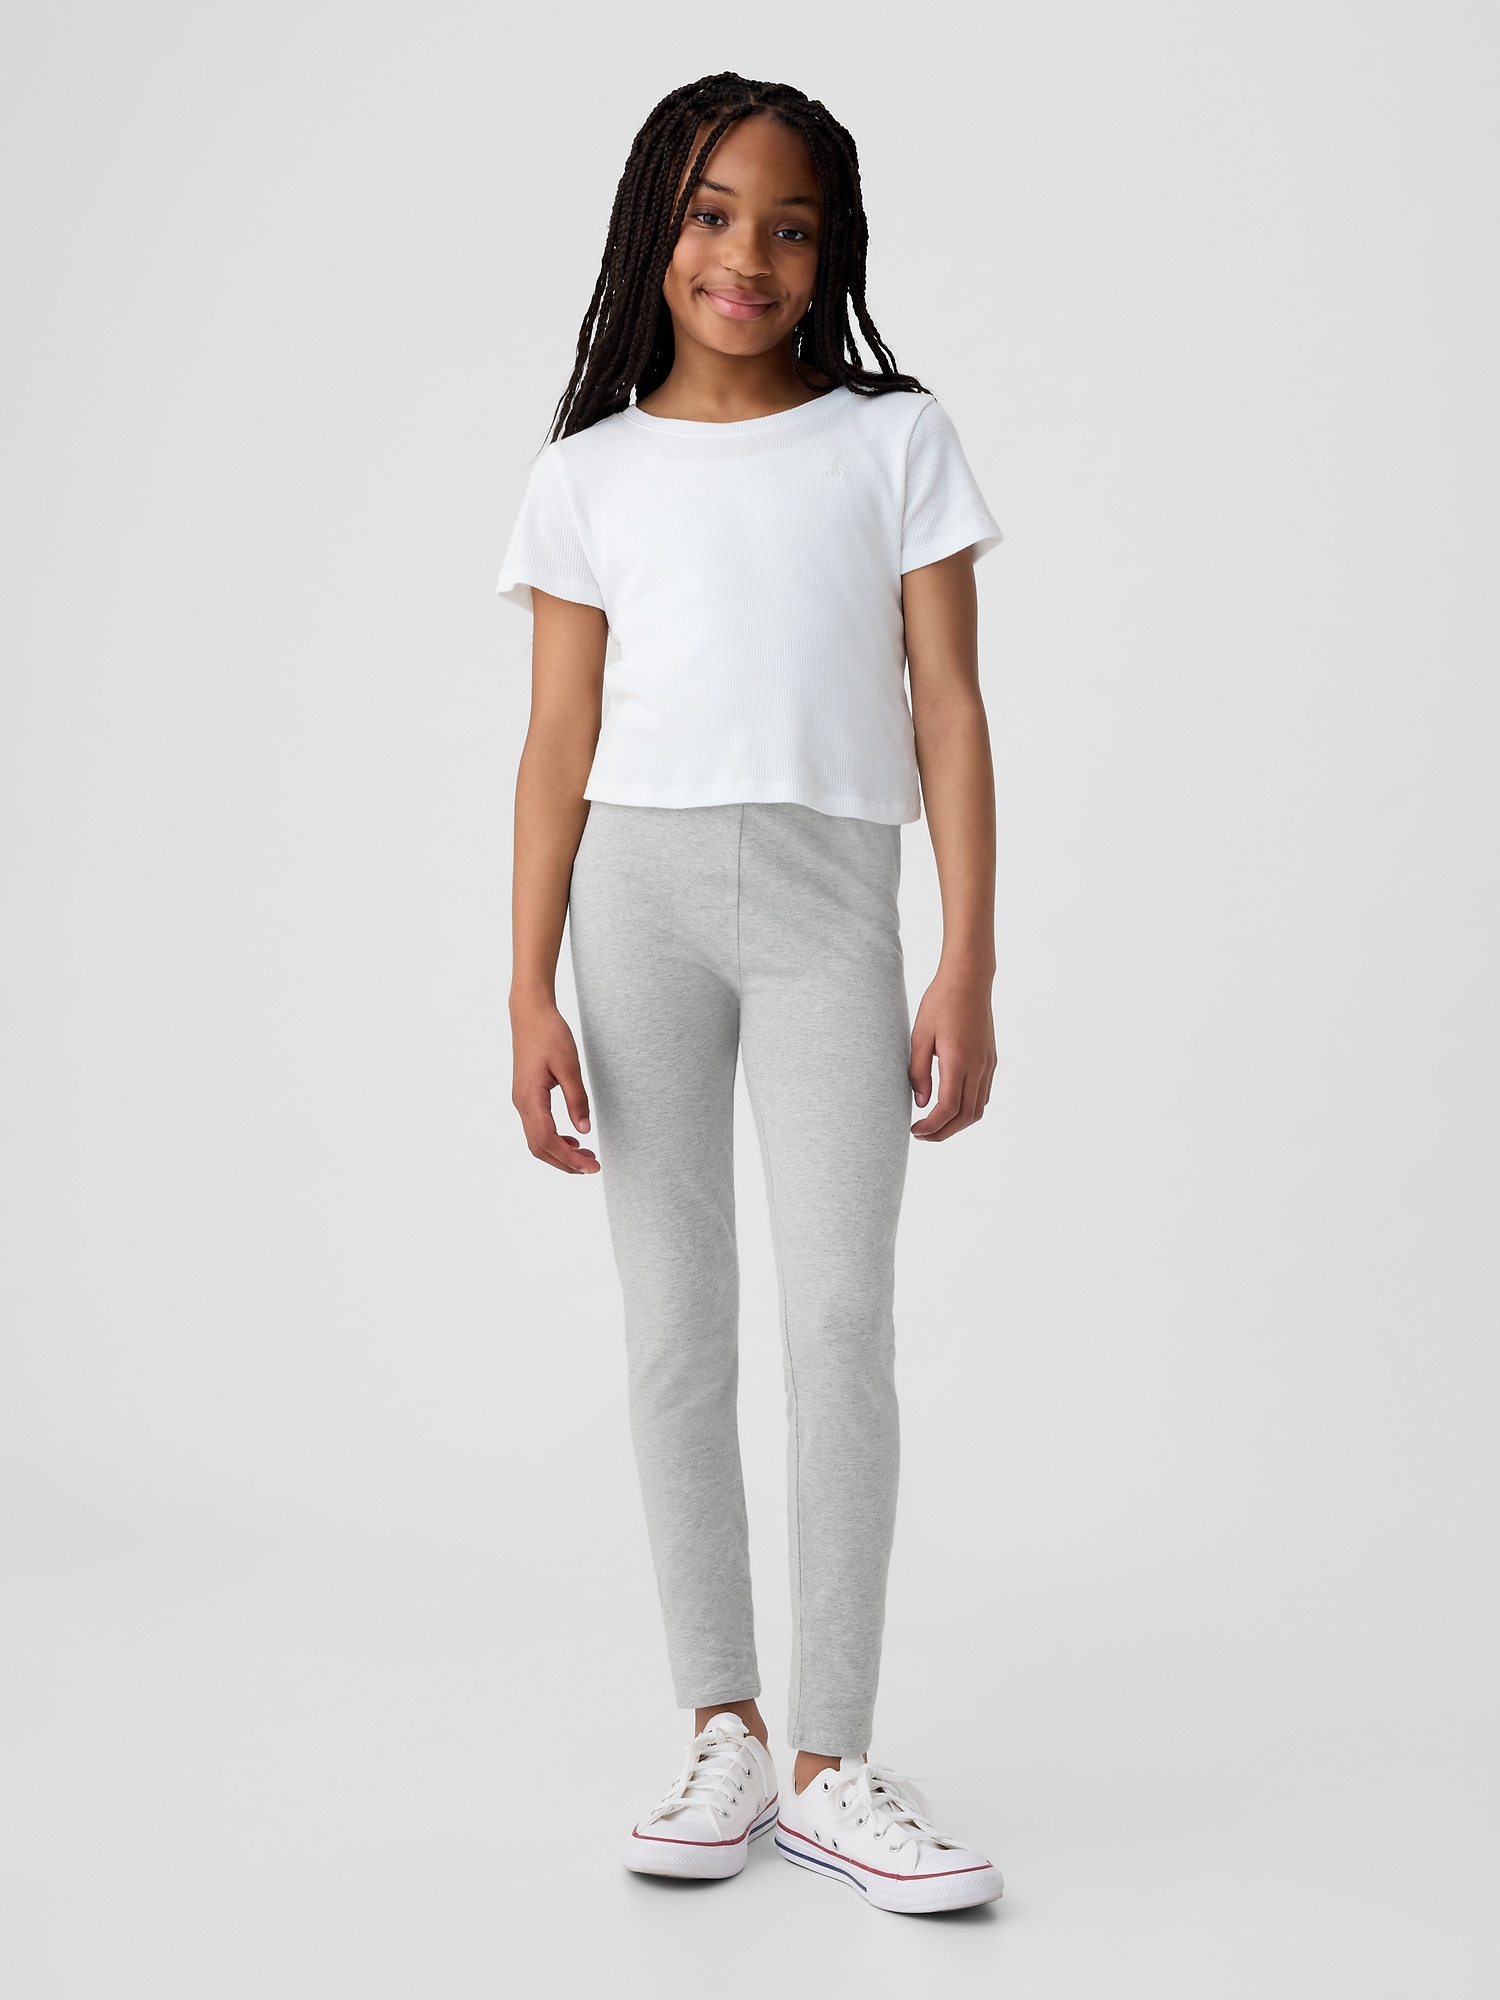 Thick& Extra Warm Cotton Girls Full Length Leggings Nordic Designs Kidd  Children | eBay